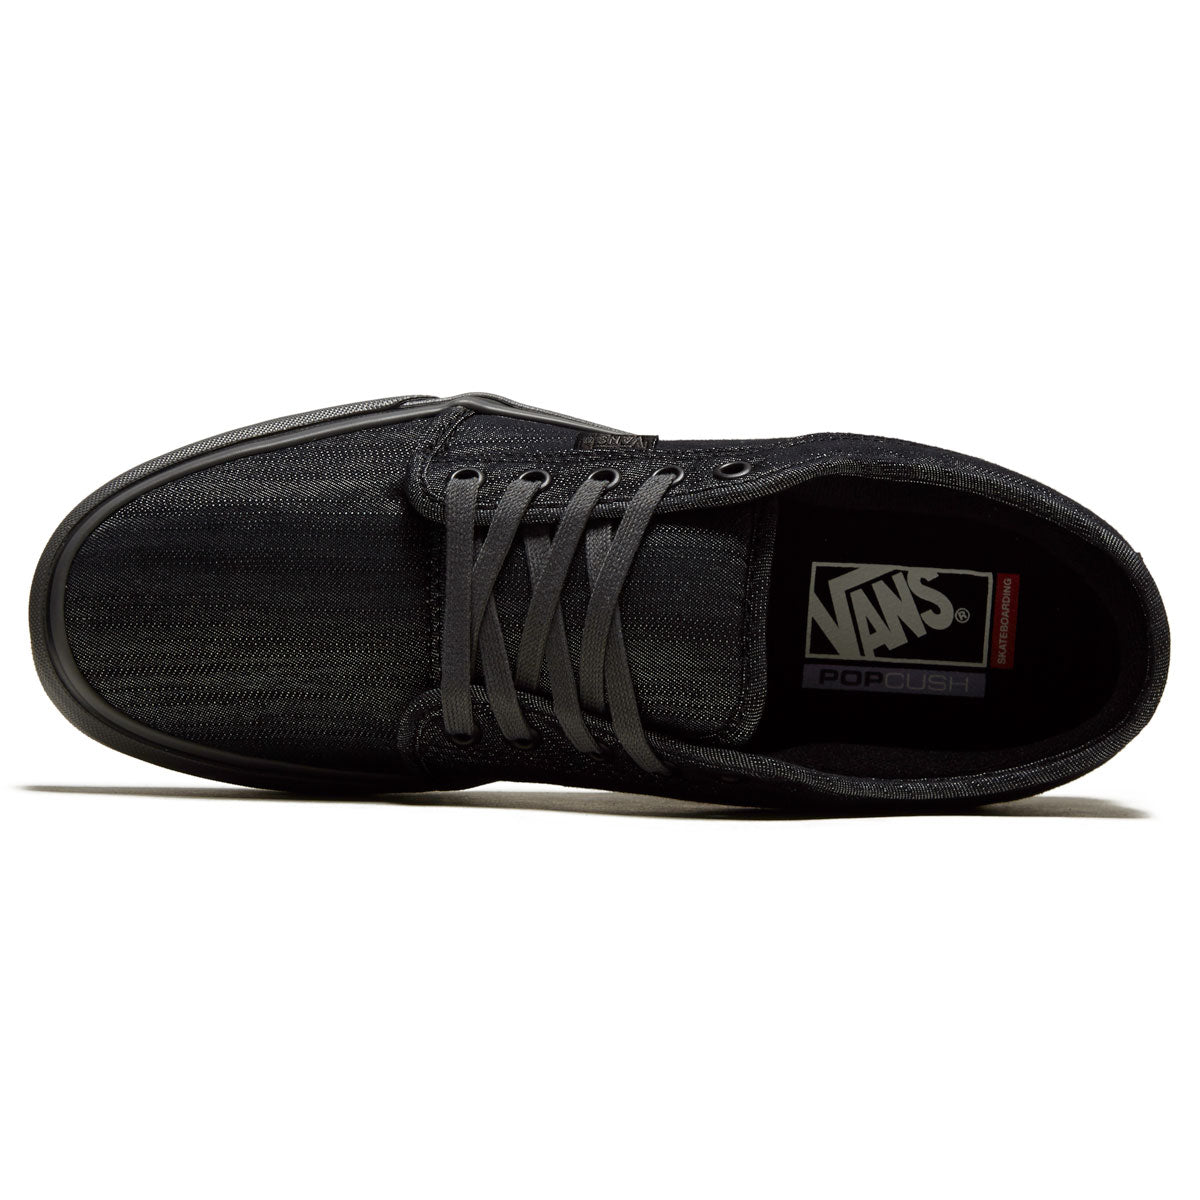 Vans Skate Chukka Low Shoes - Black/Grey/Denim image 3